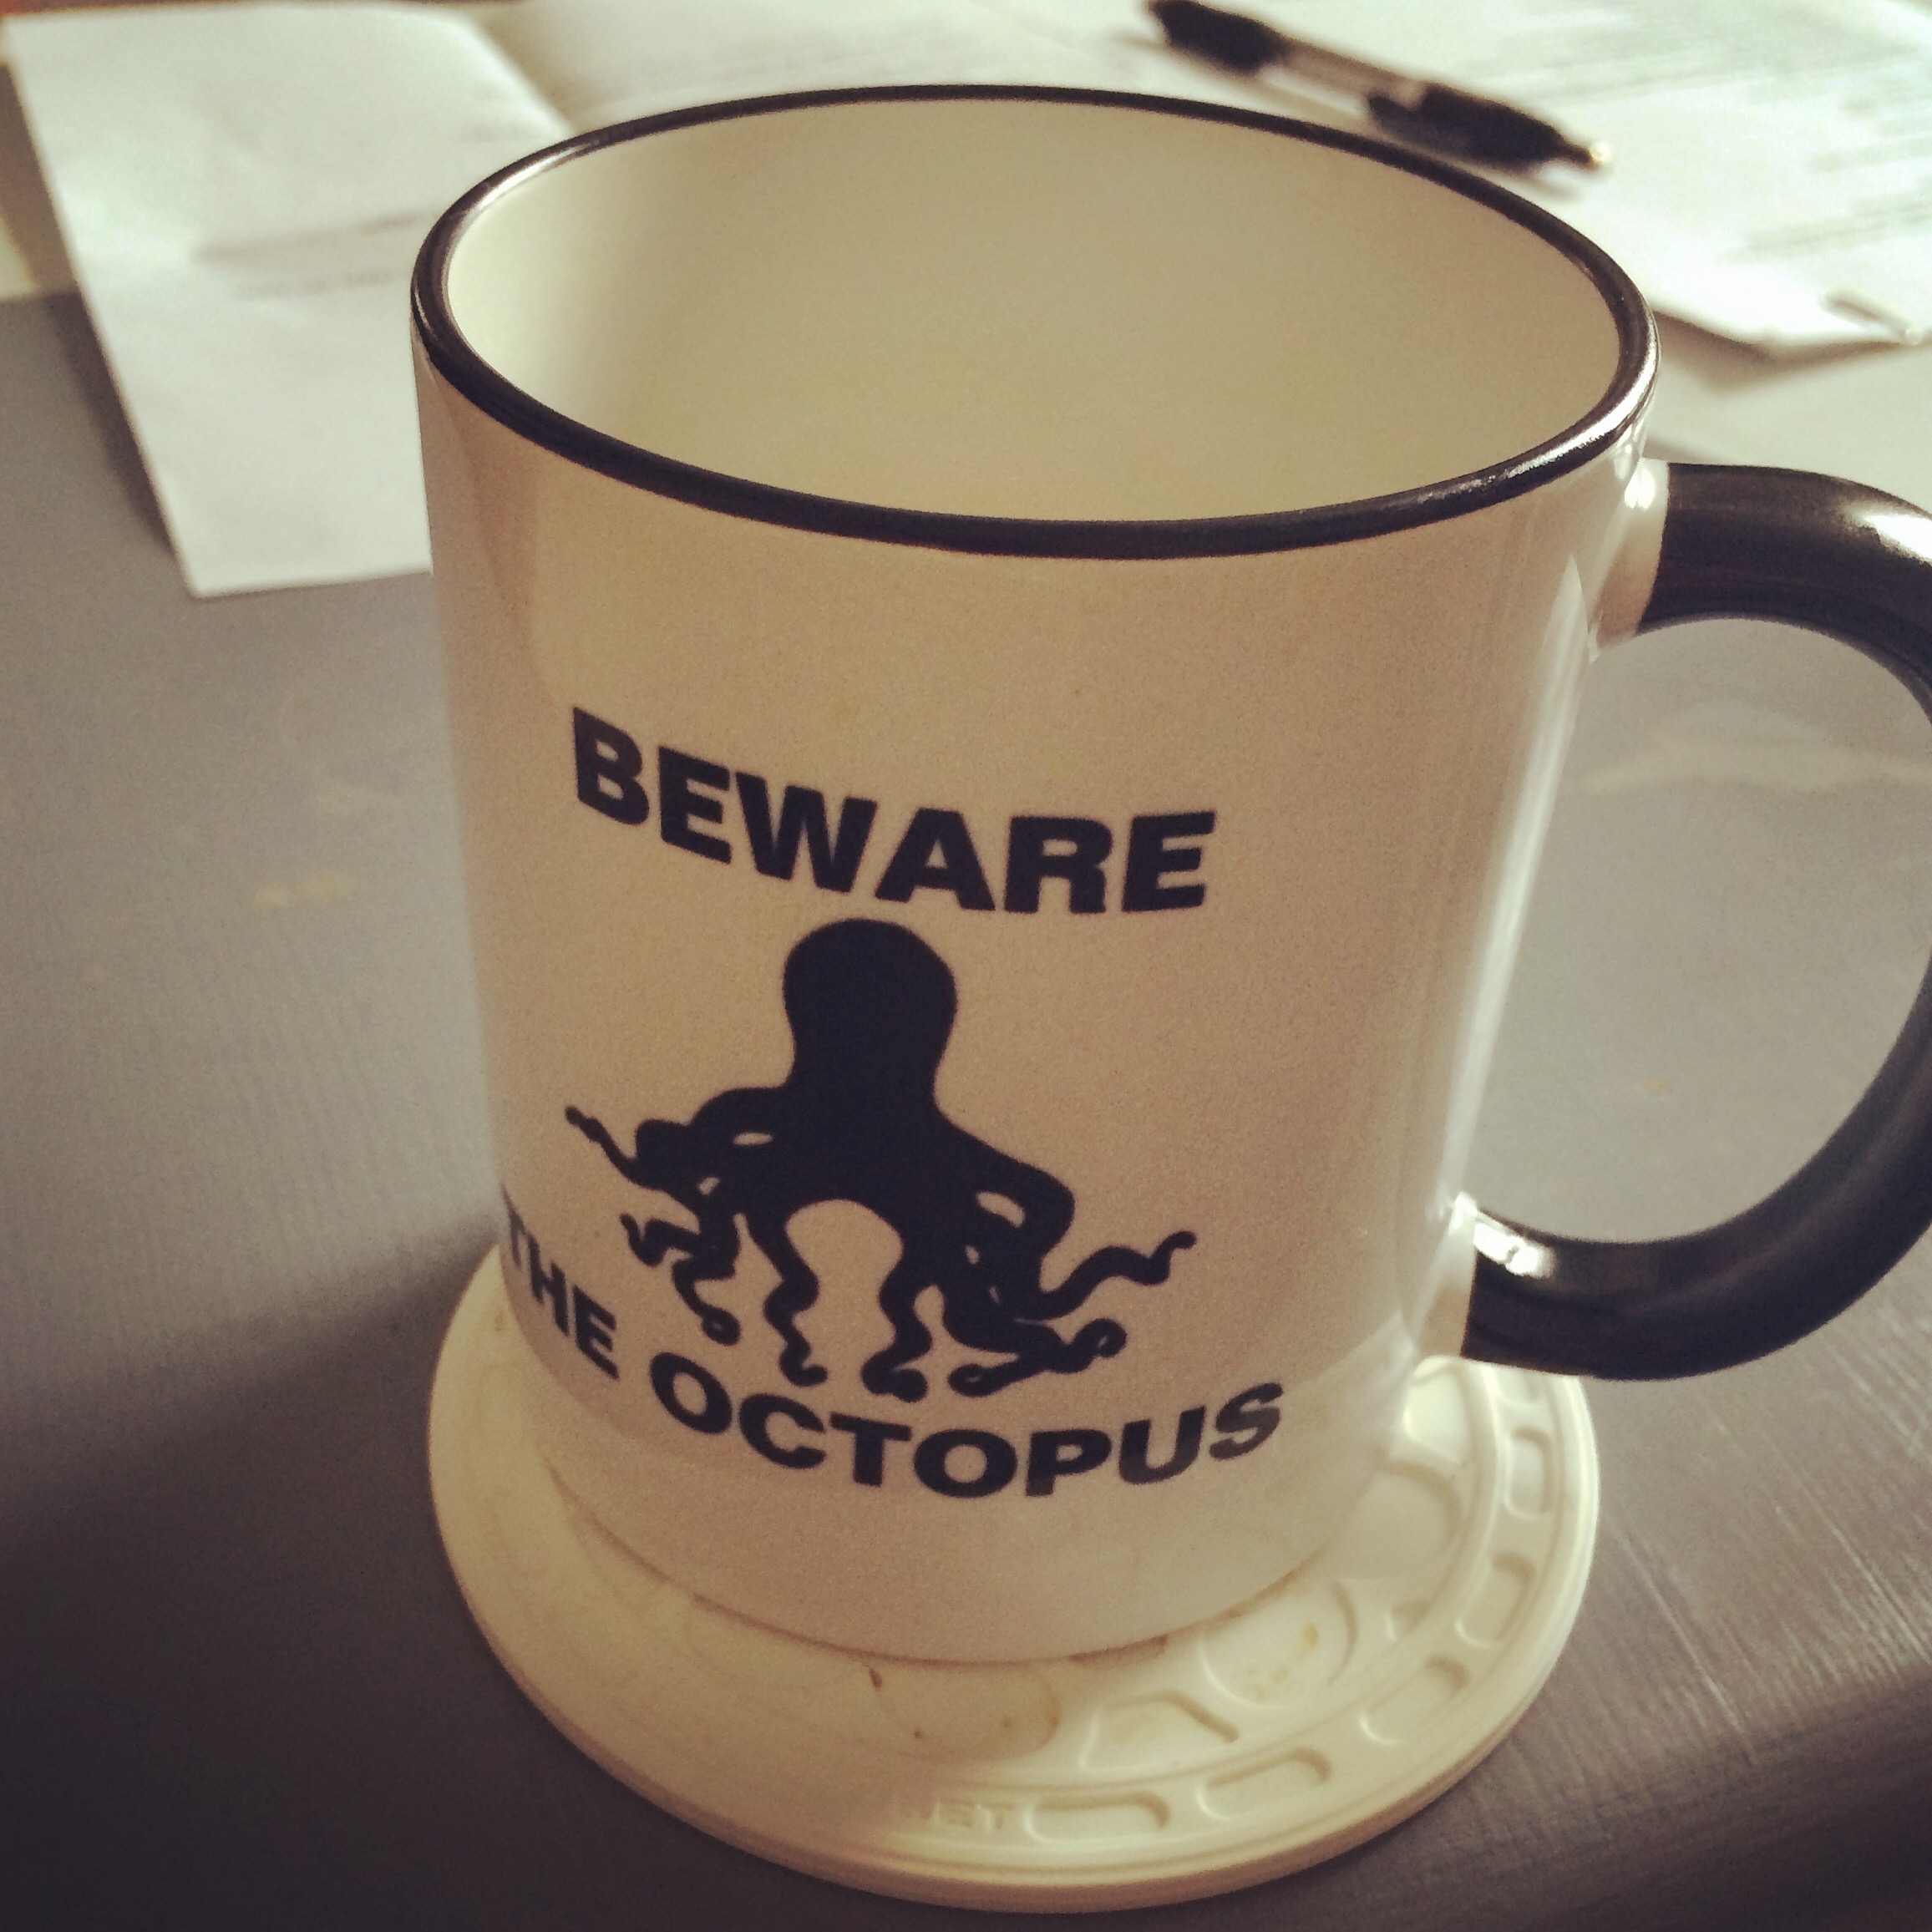 Beware the Octopus Mug merch gail carriger